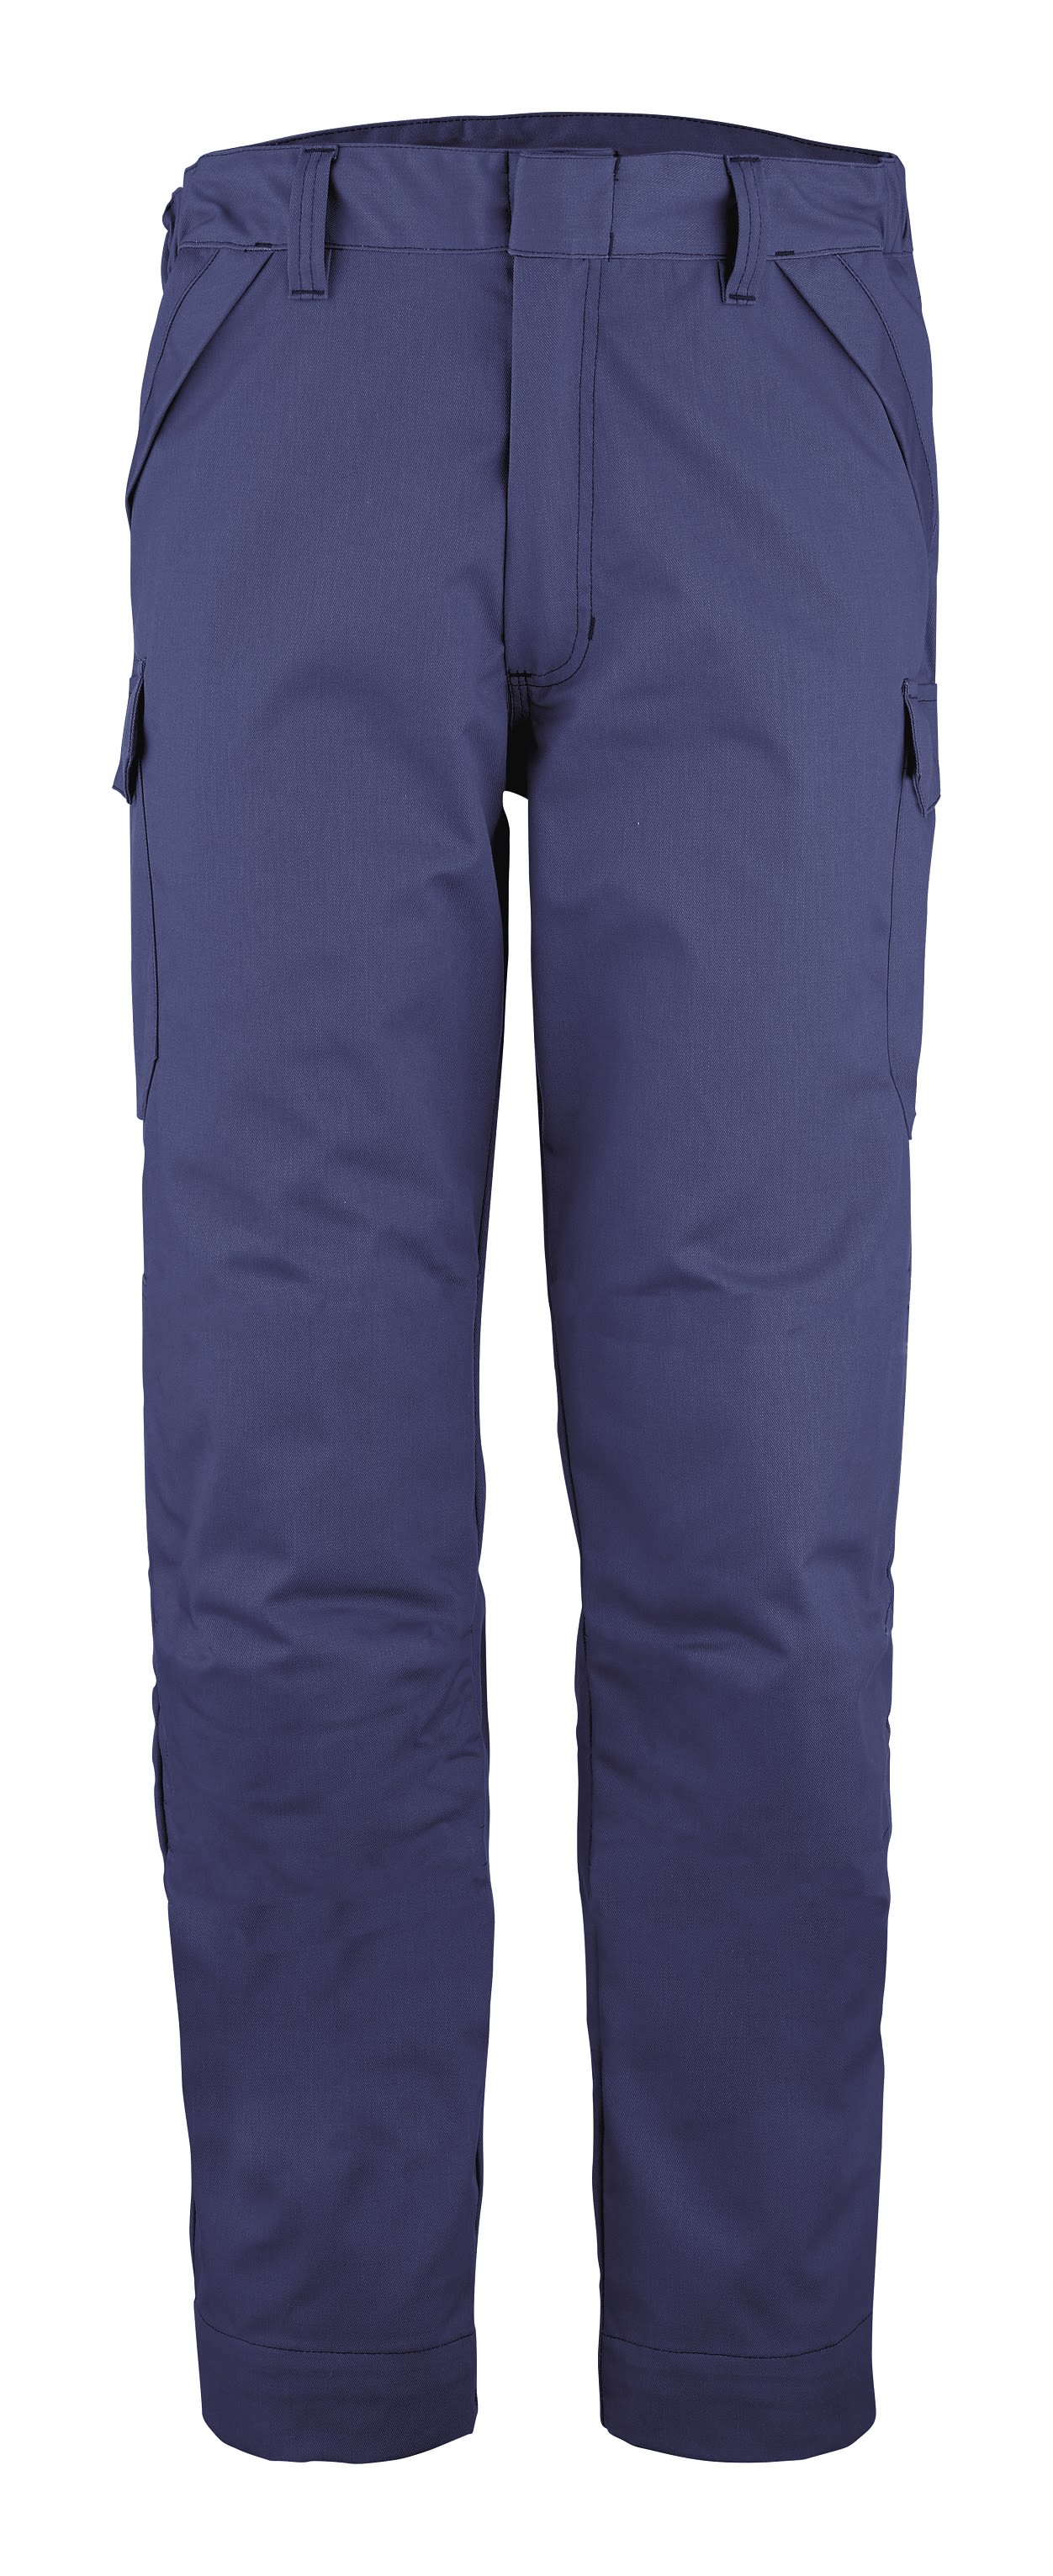 Pantalon de travail Cepovett Safety Atex 320 Gorely, L Mixte, Marin, Ignifuge